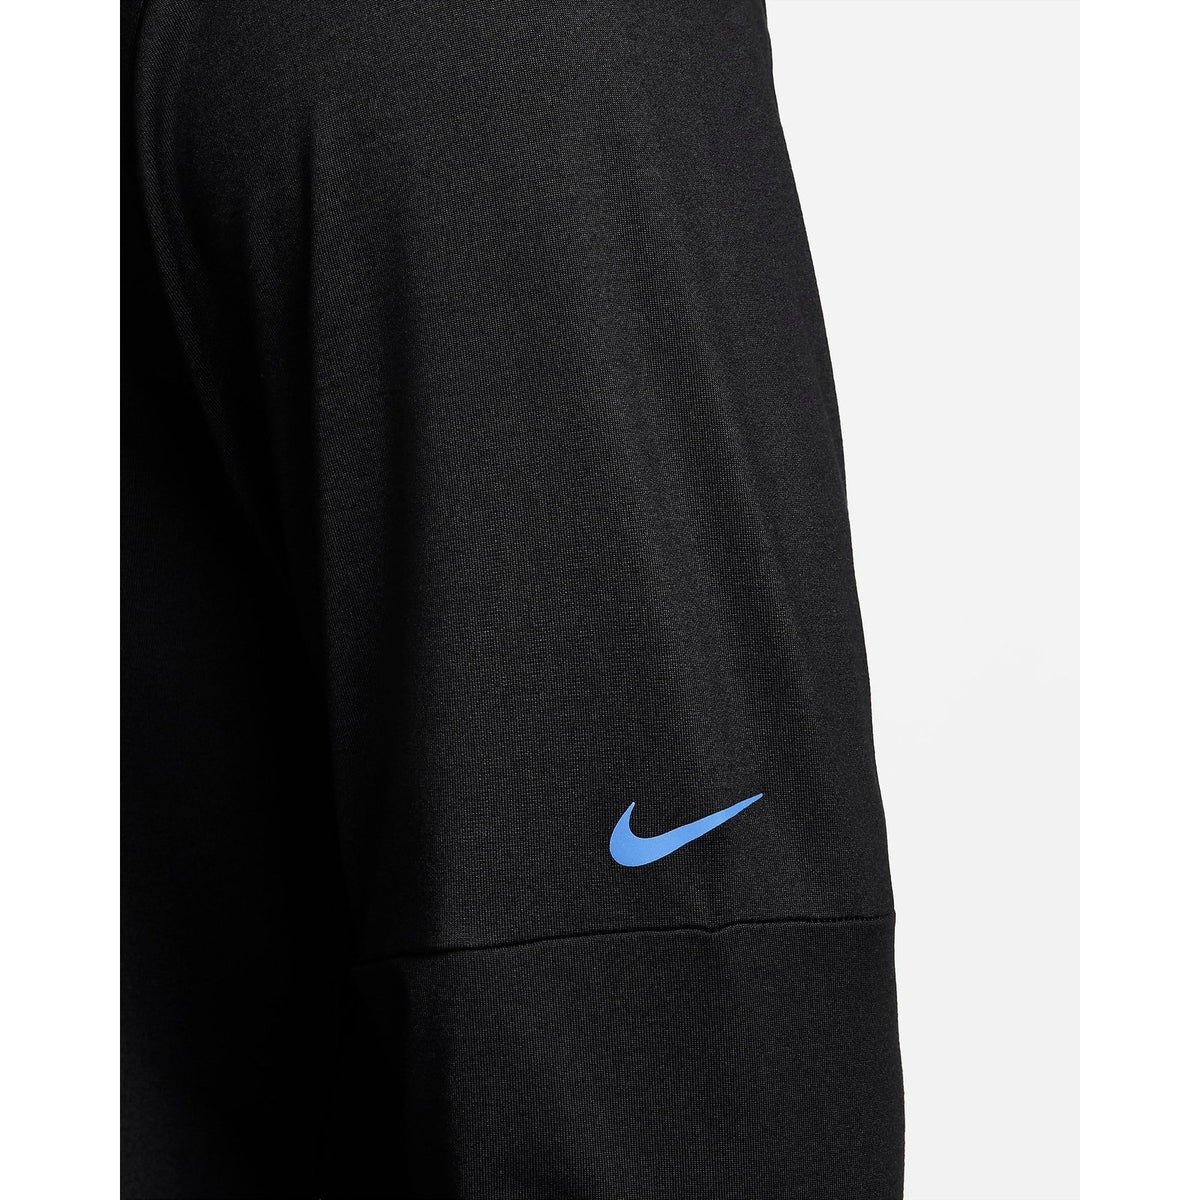 Nike BRS Dri-FIT 1/2-Zip Running Top Mens APPAREL - Mens Long Sleeve Tops 